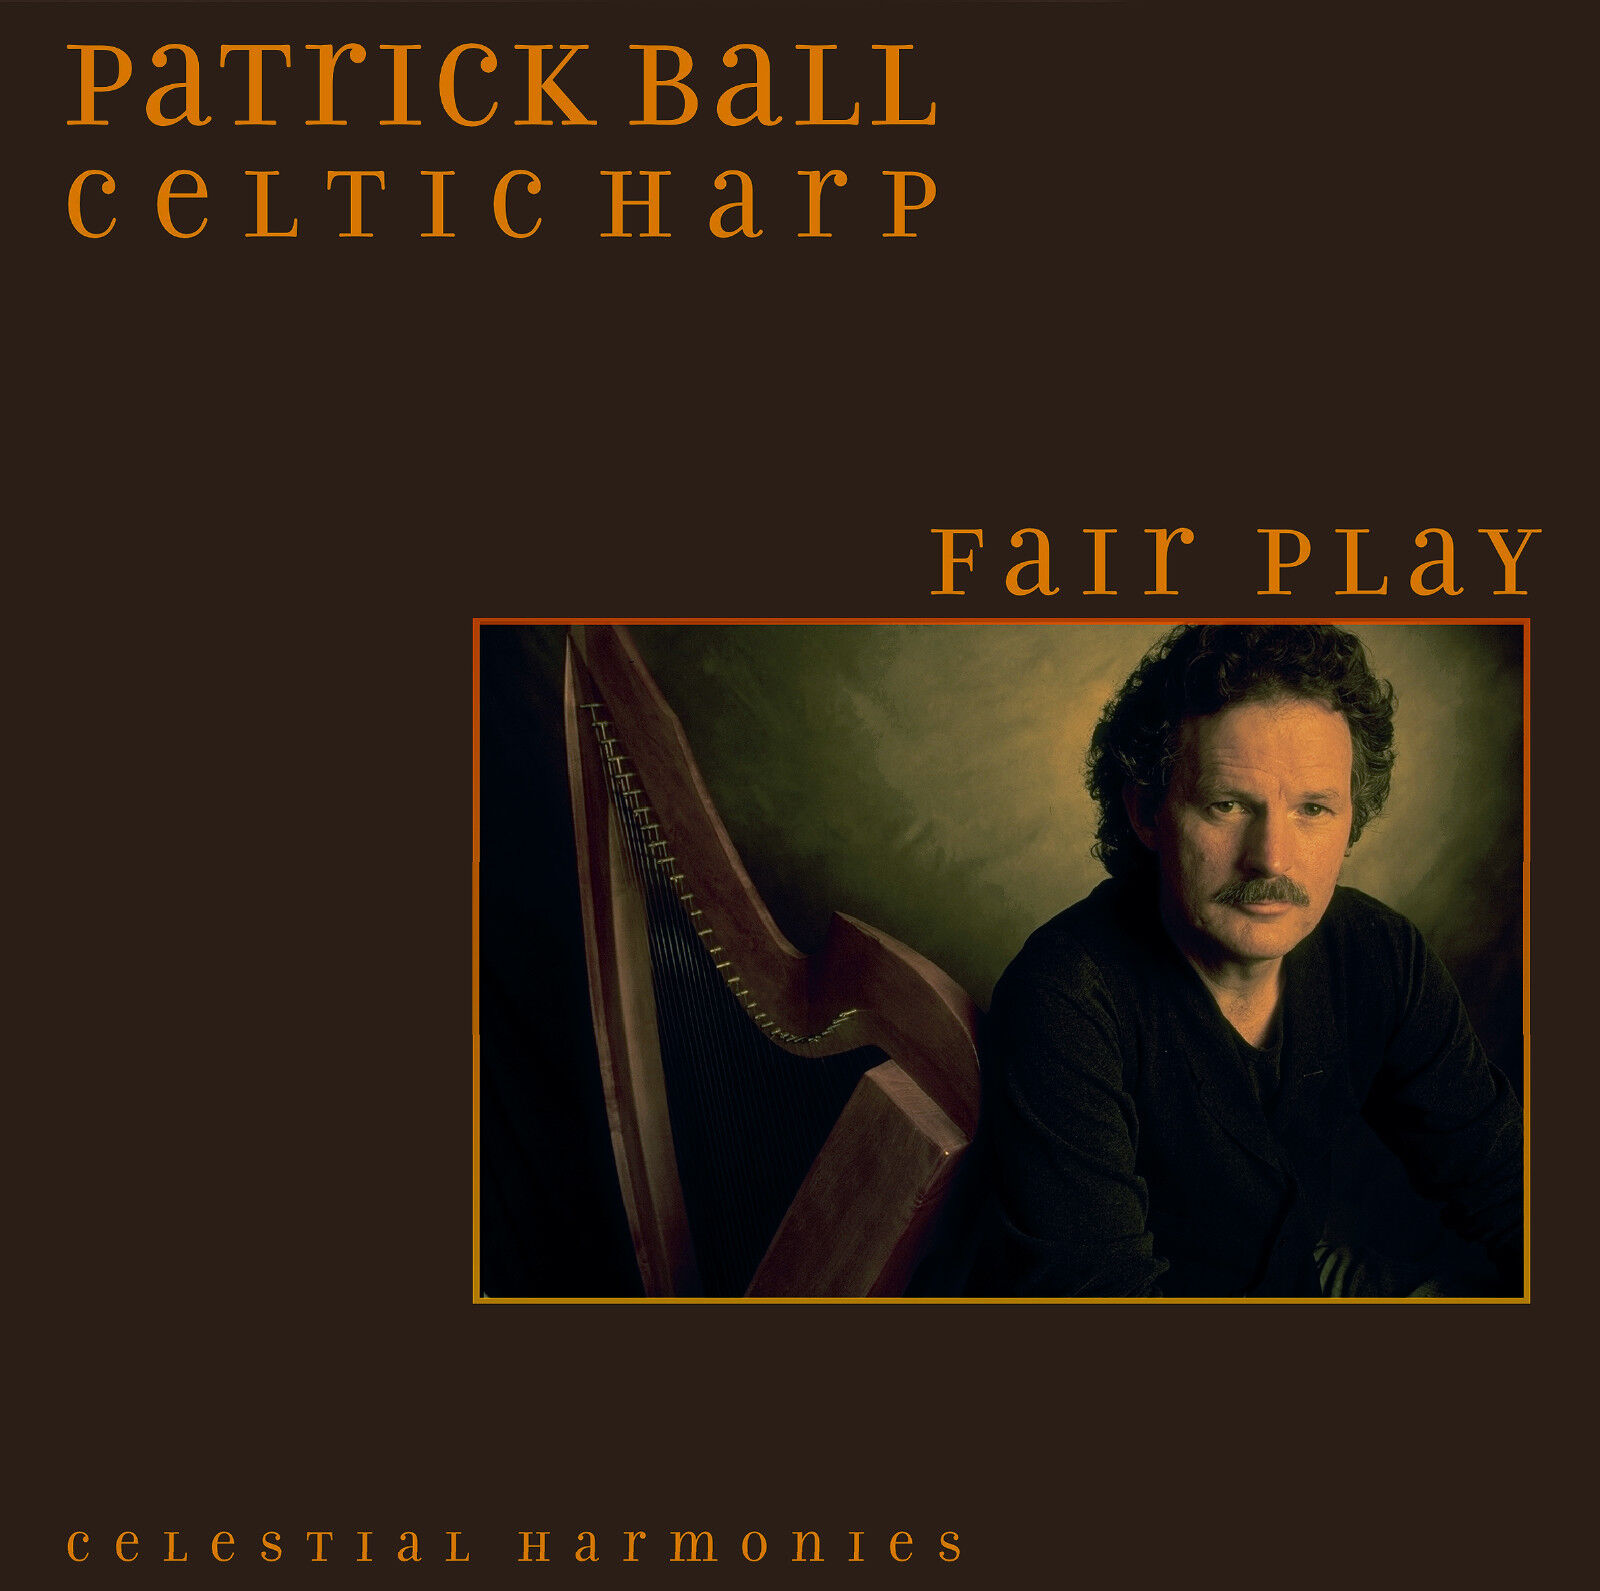 FAIR PLAY — PATRICK BALL, CELTIC HARP 